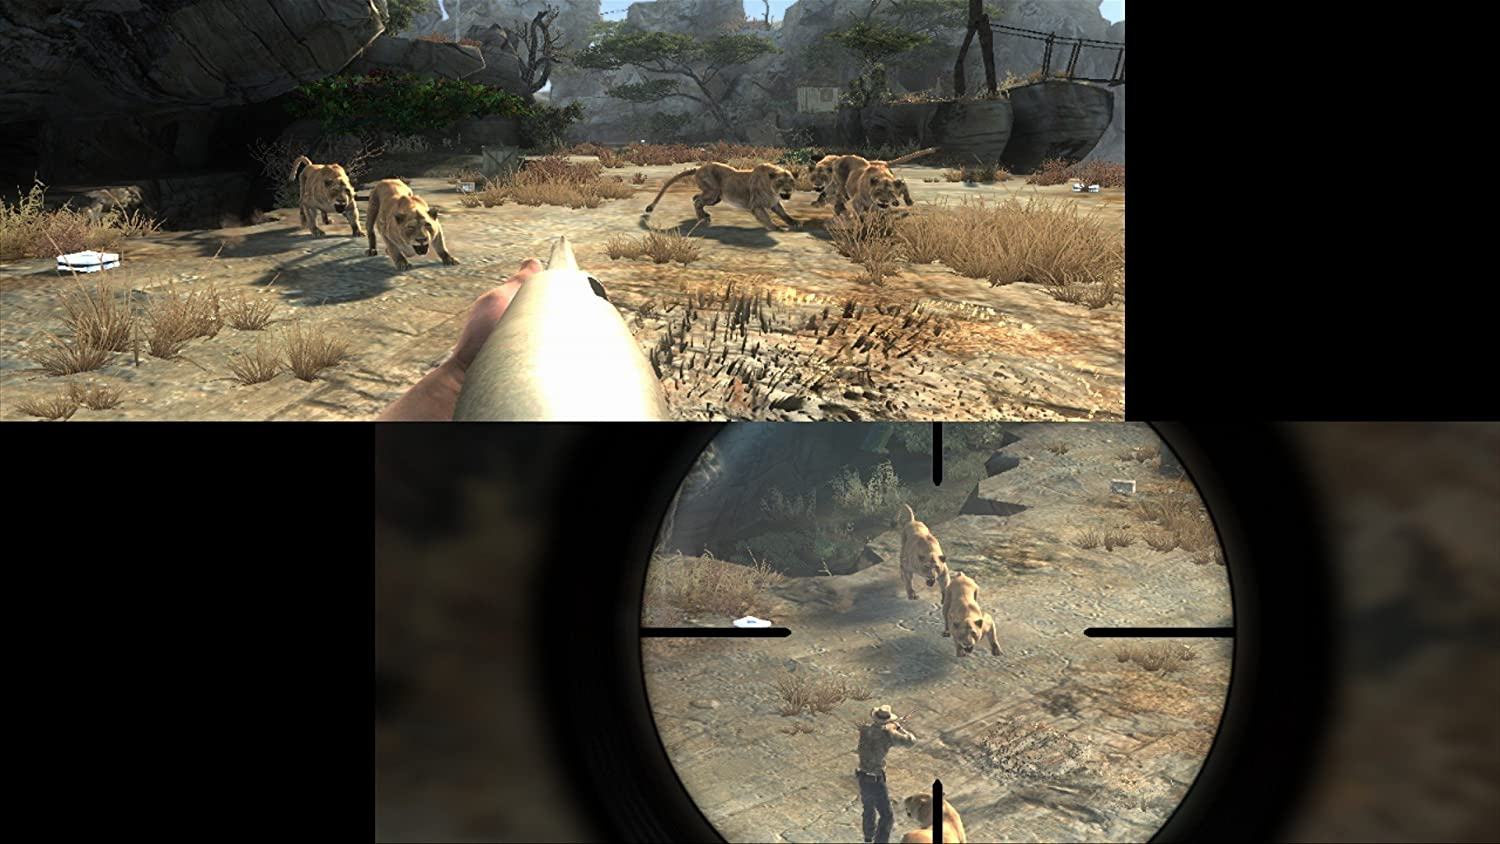 inkl. Fearmaster Shot - 2013 Dangerous 3] Top Hunts [PlayStation Cabela\'s